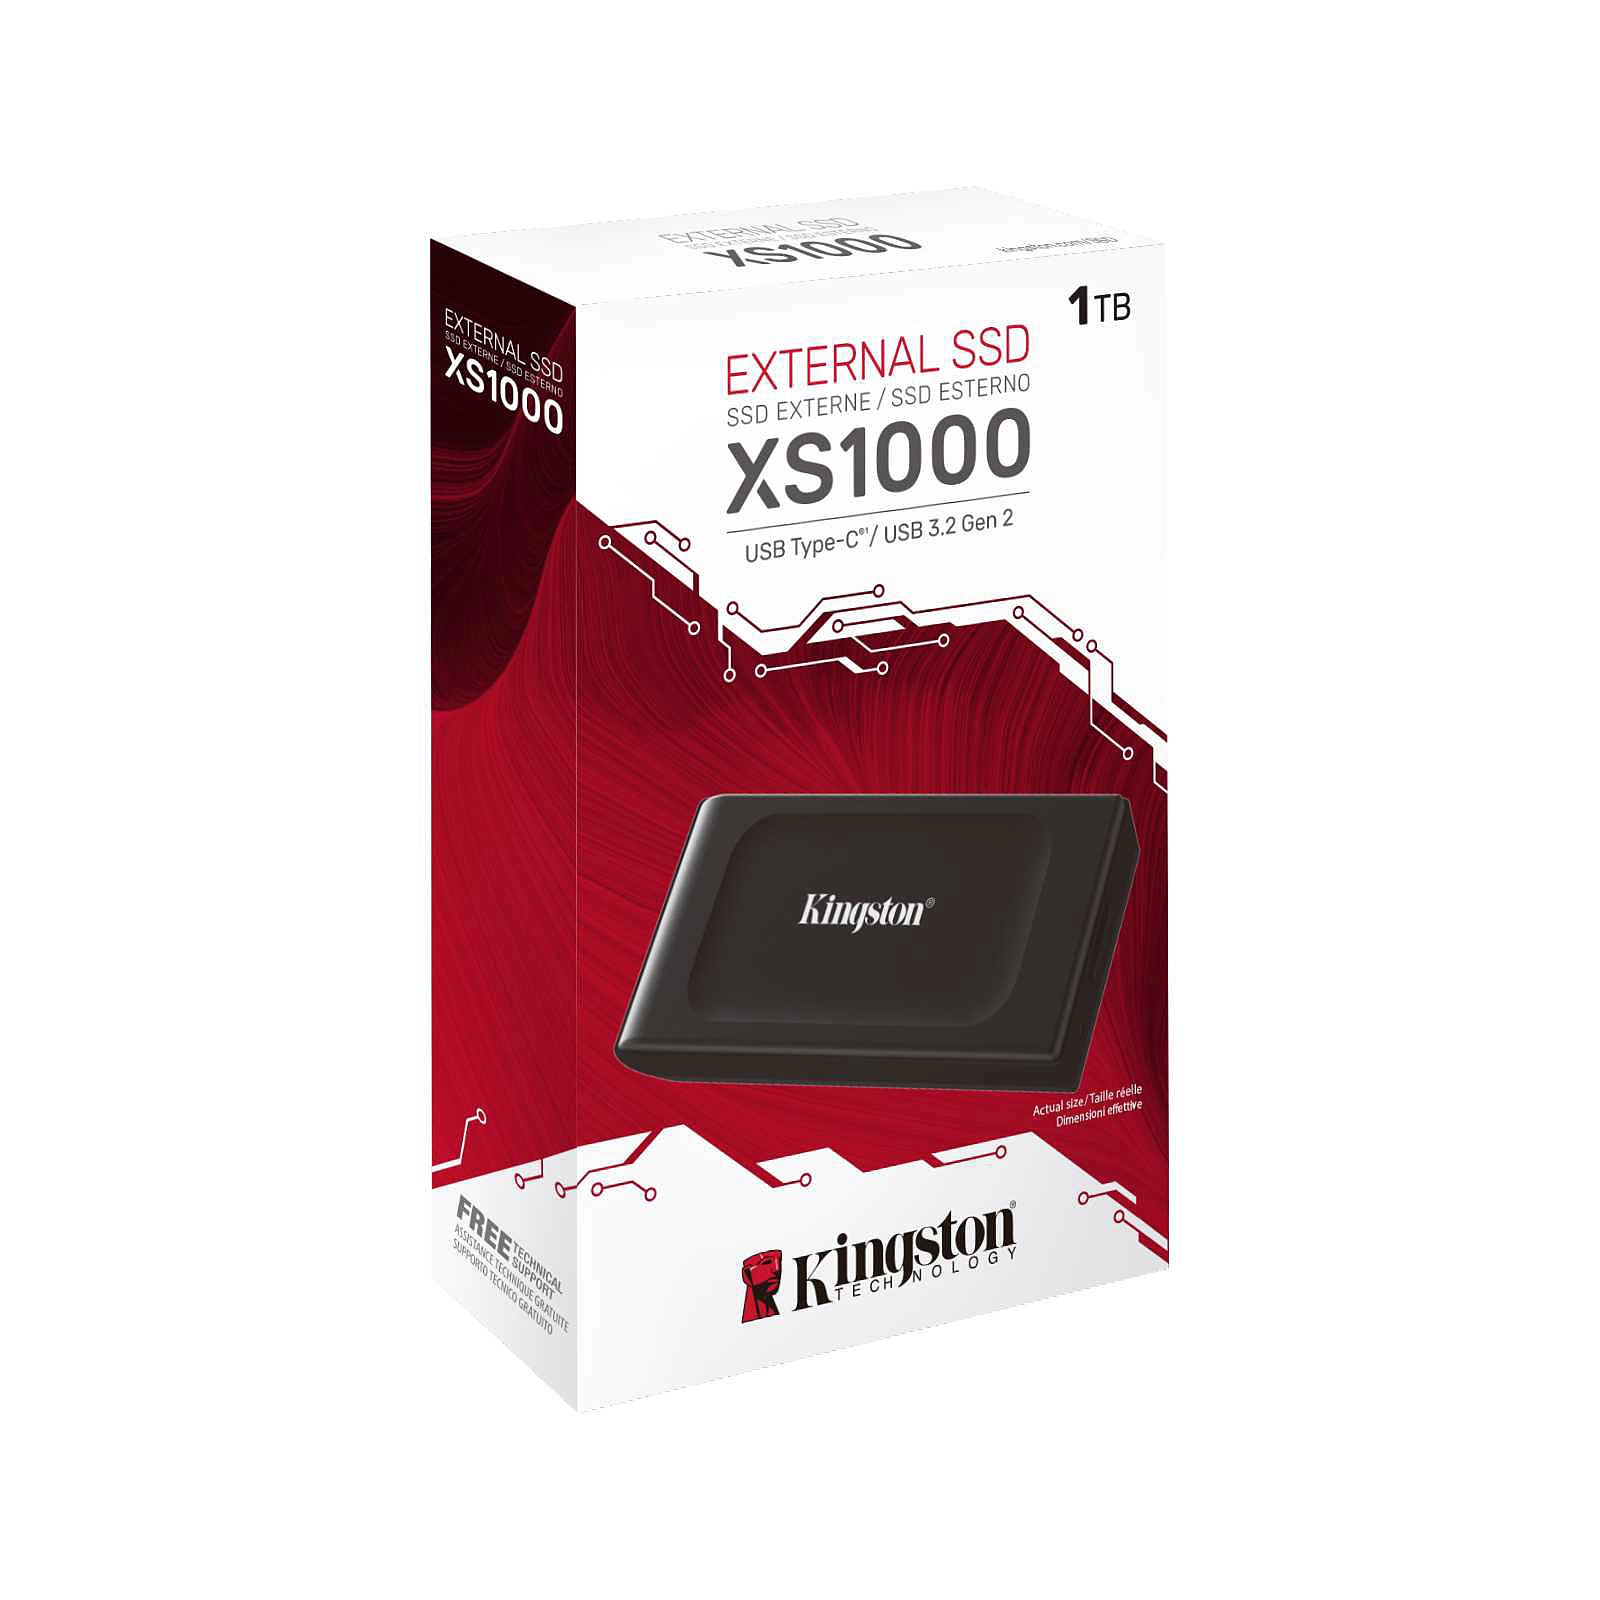 KINGSTON XS1000 1TB Portable External SSD, USB 3.2 Gen 2, Up to 1050MB/s read, 1000MB/s write